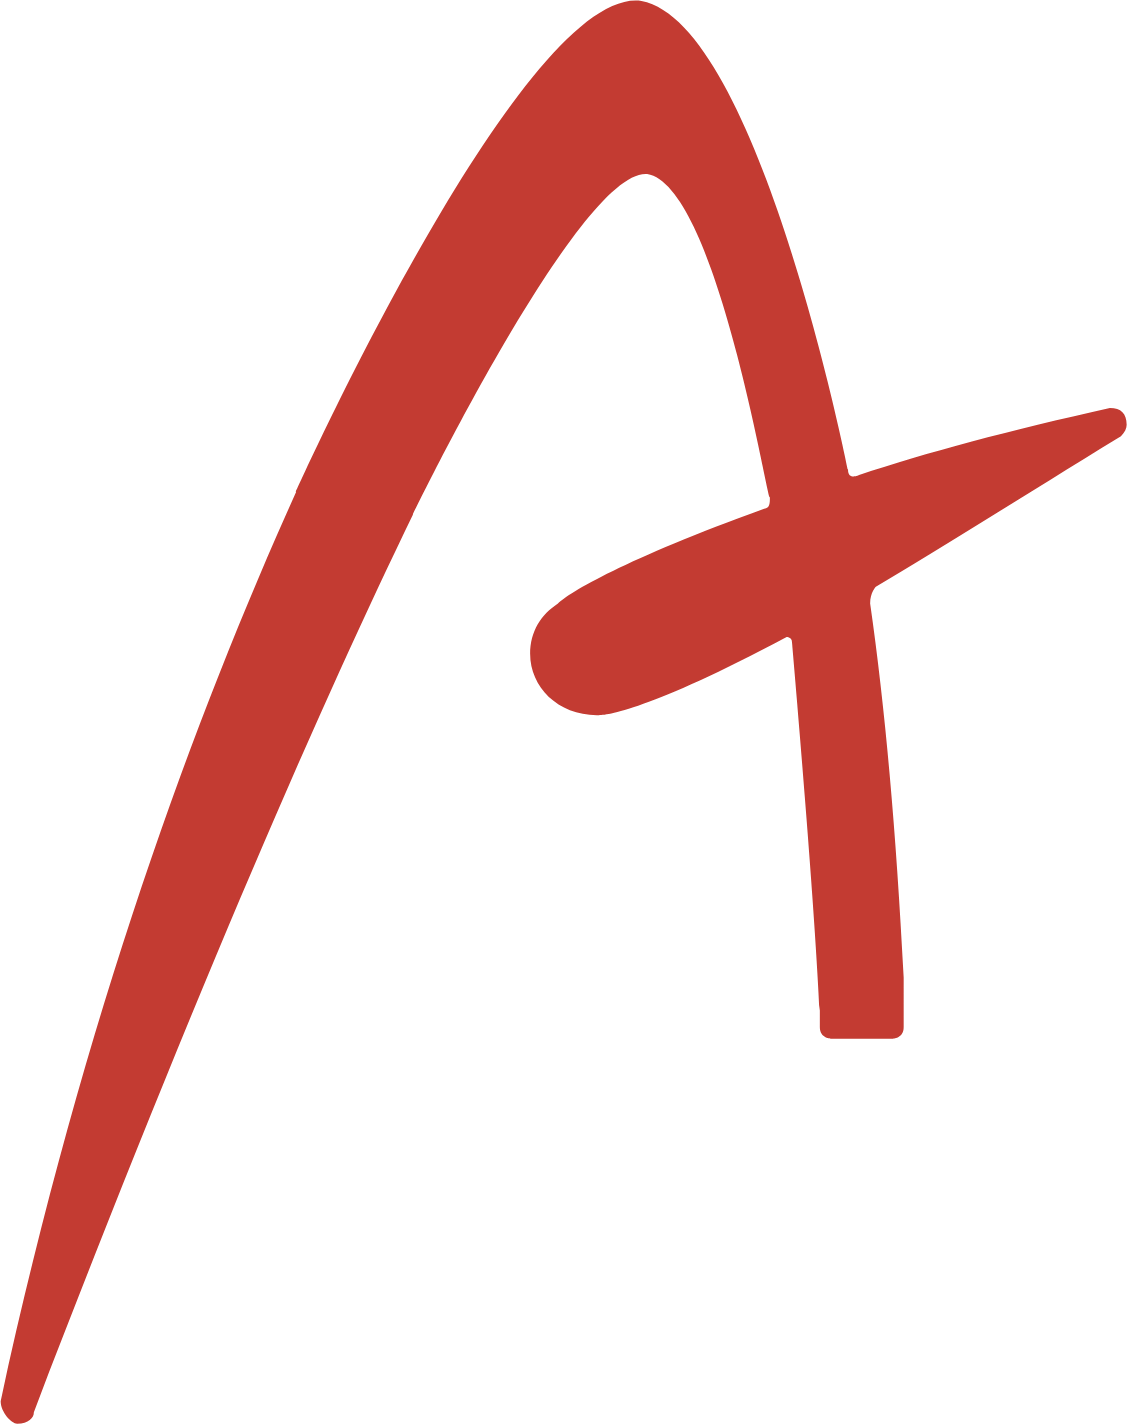 ACWA POWER Company logo (PNG transparent)